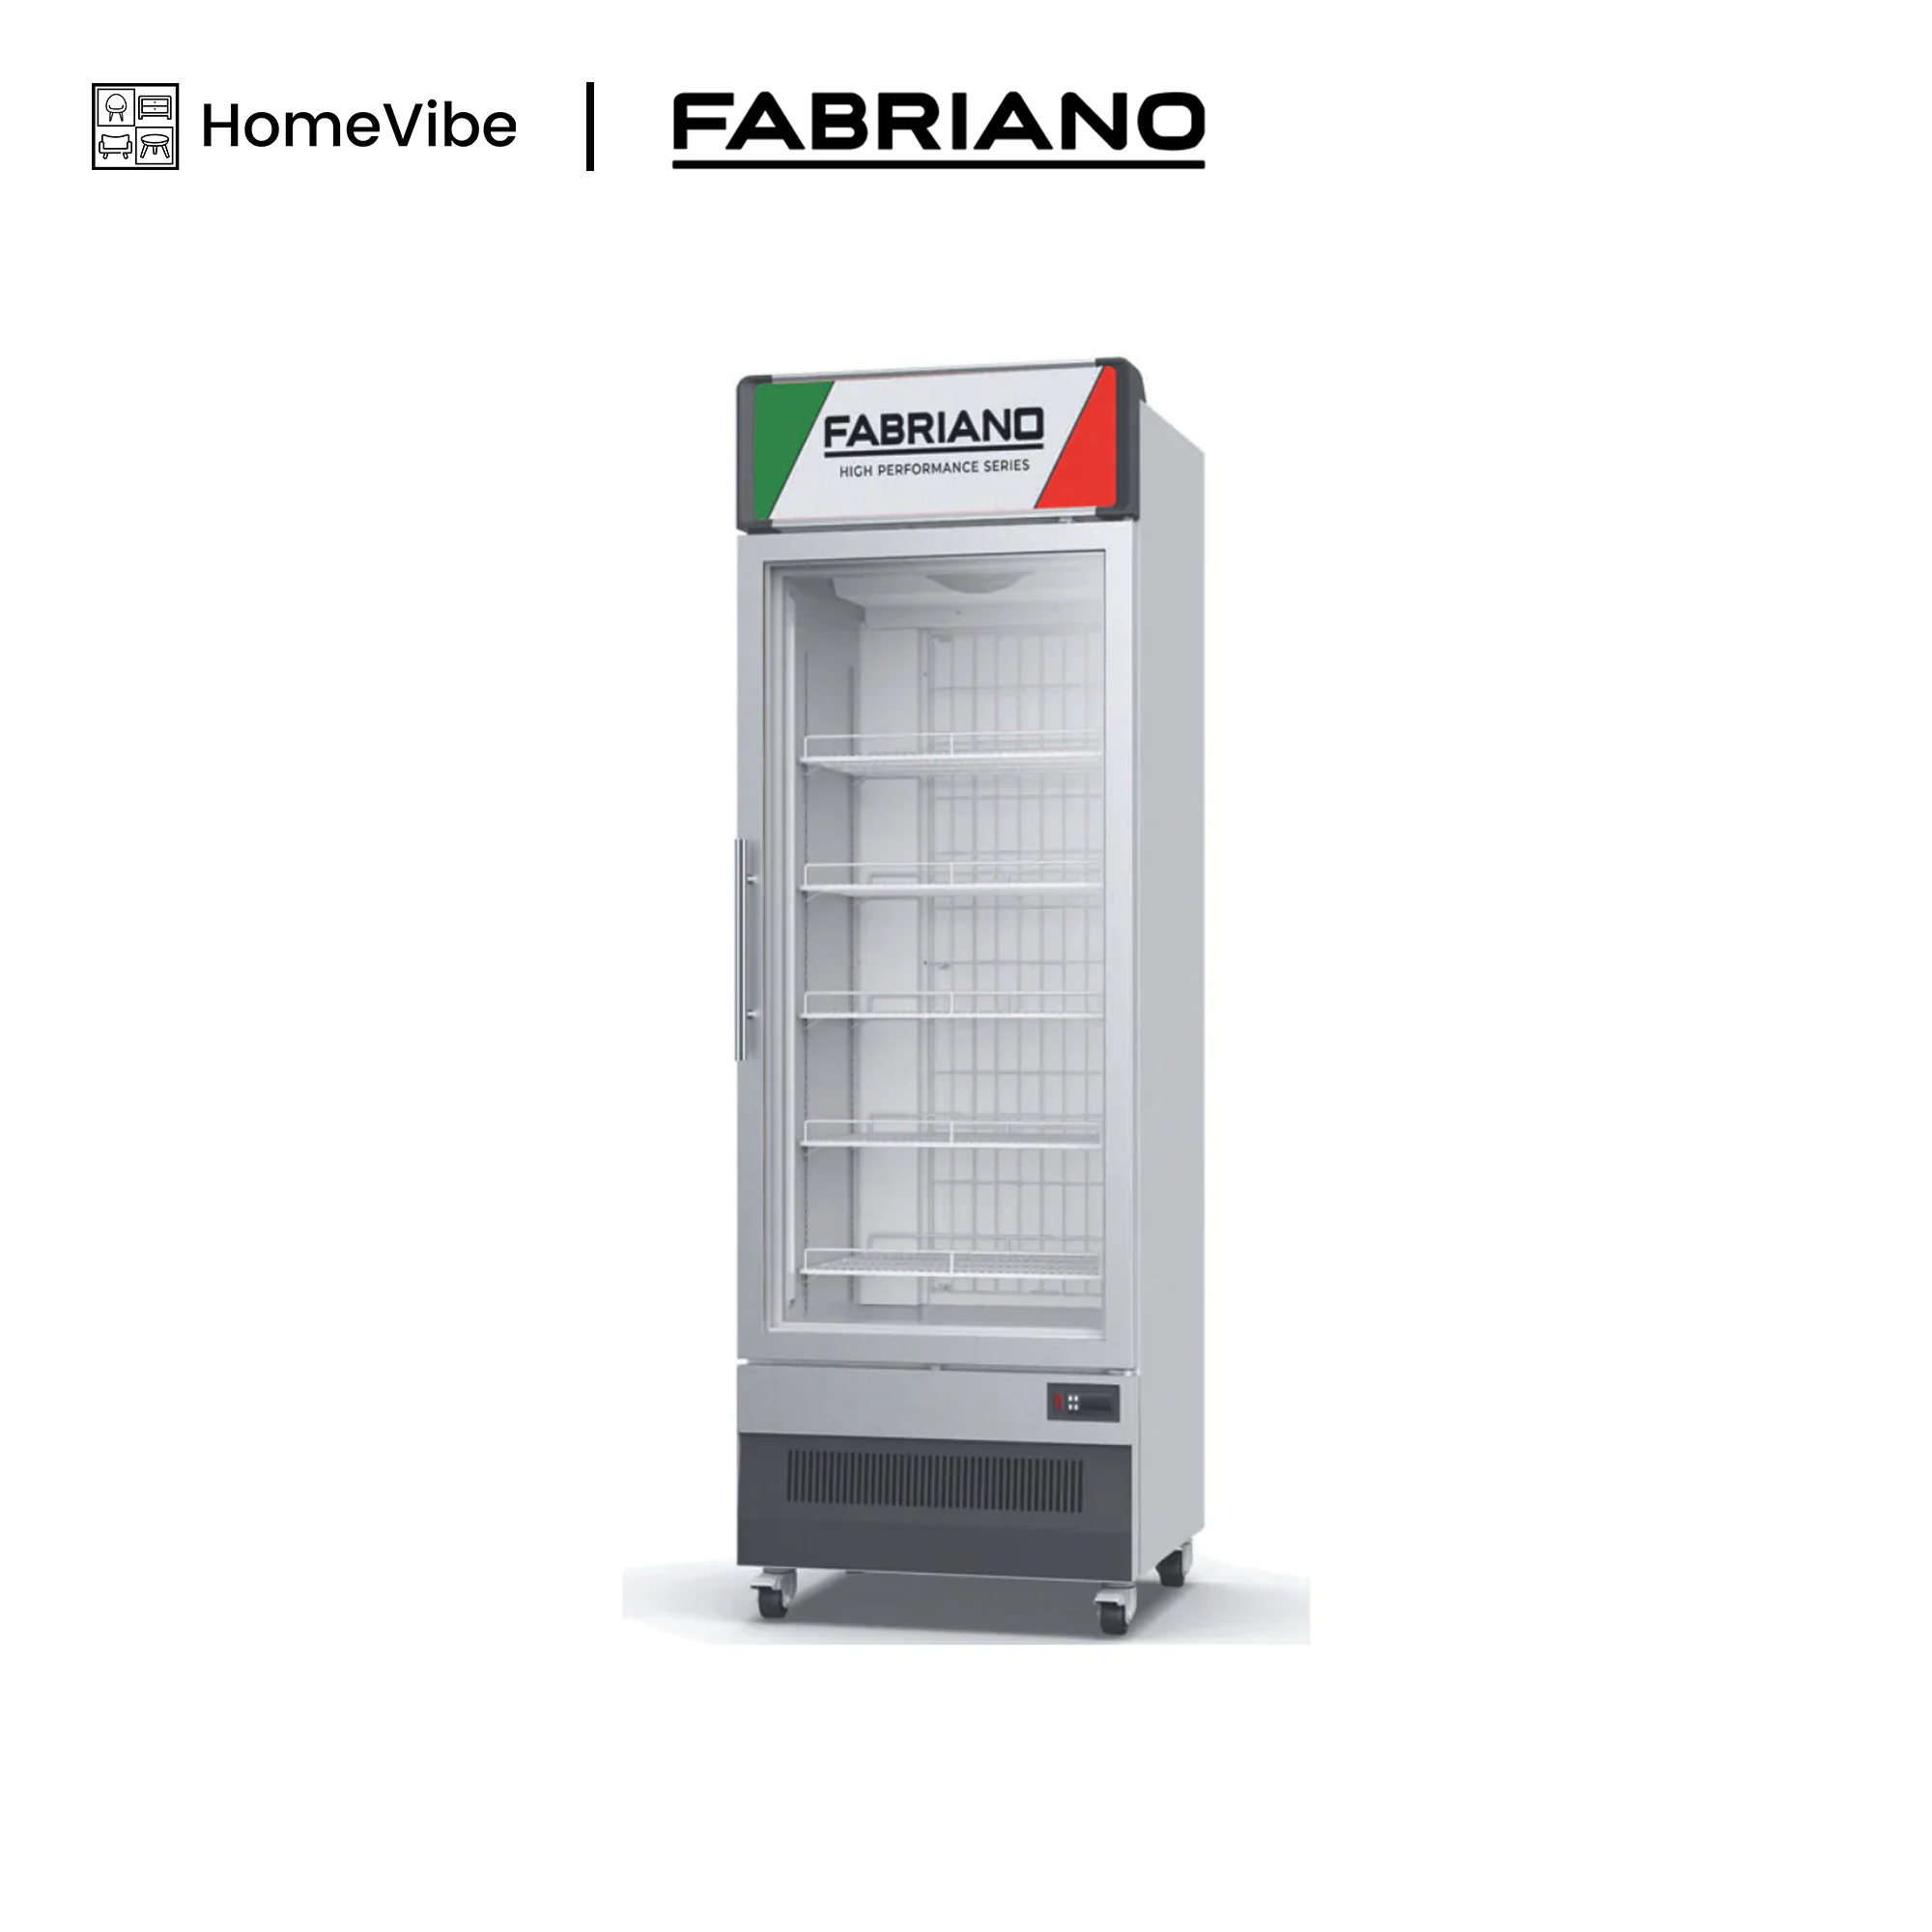 Fabriano 14cuft High Performance Showcase Freezers FFI14CSG